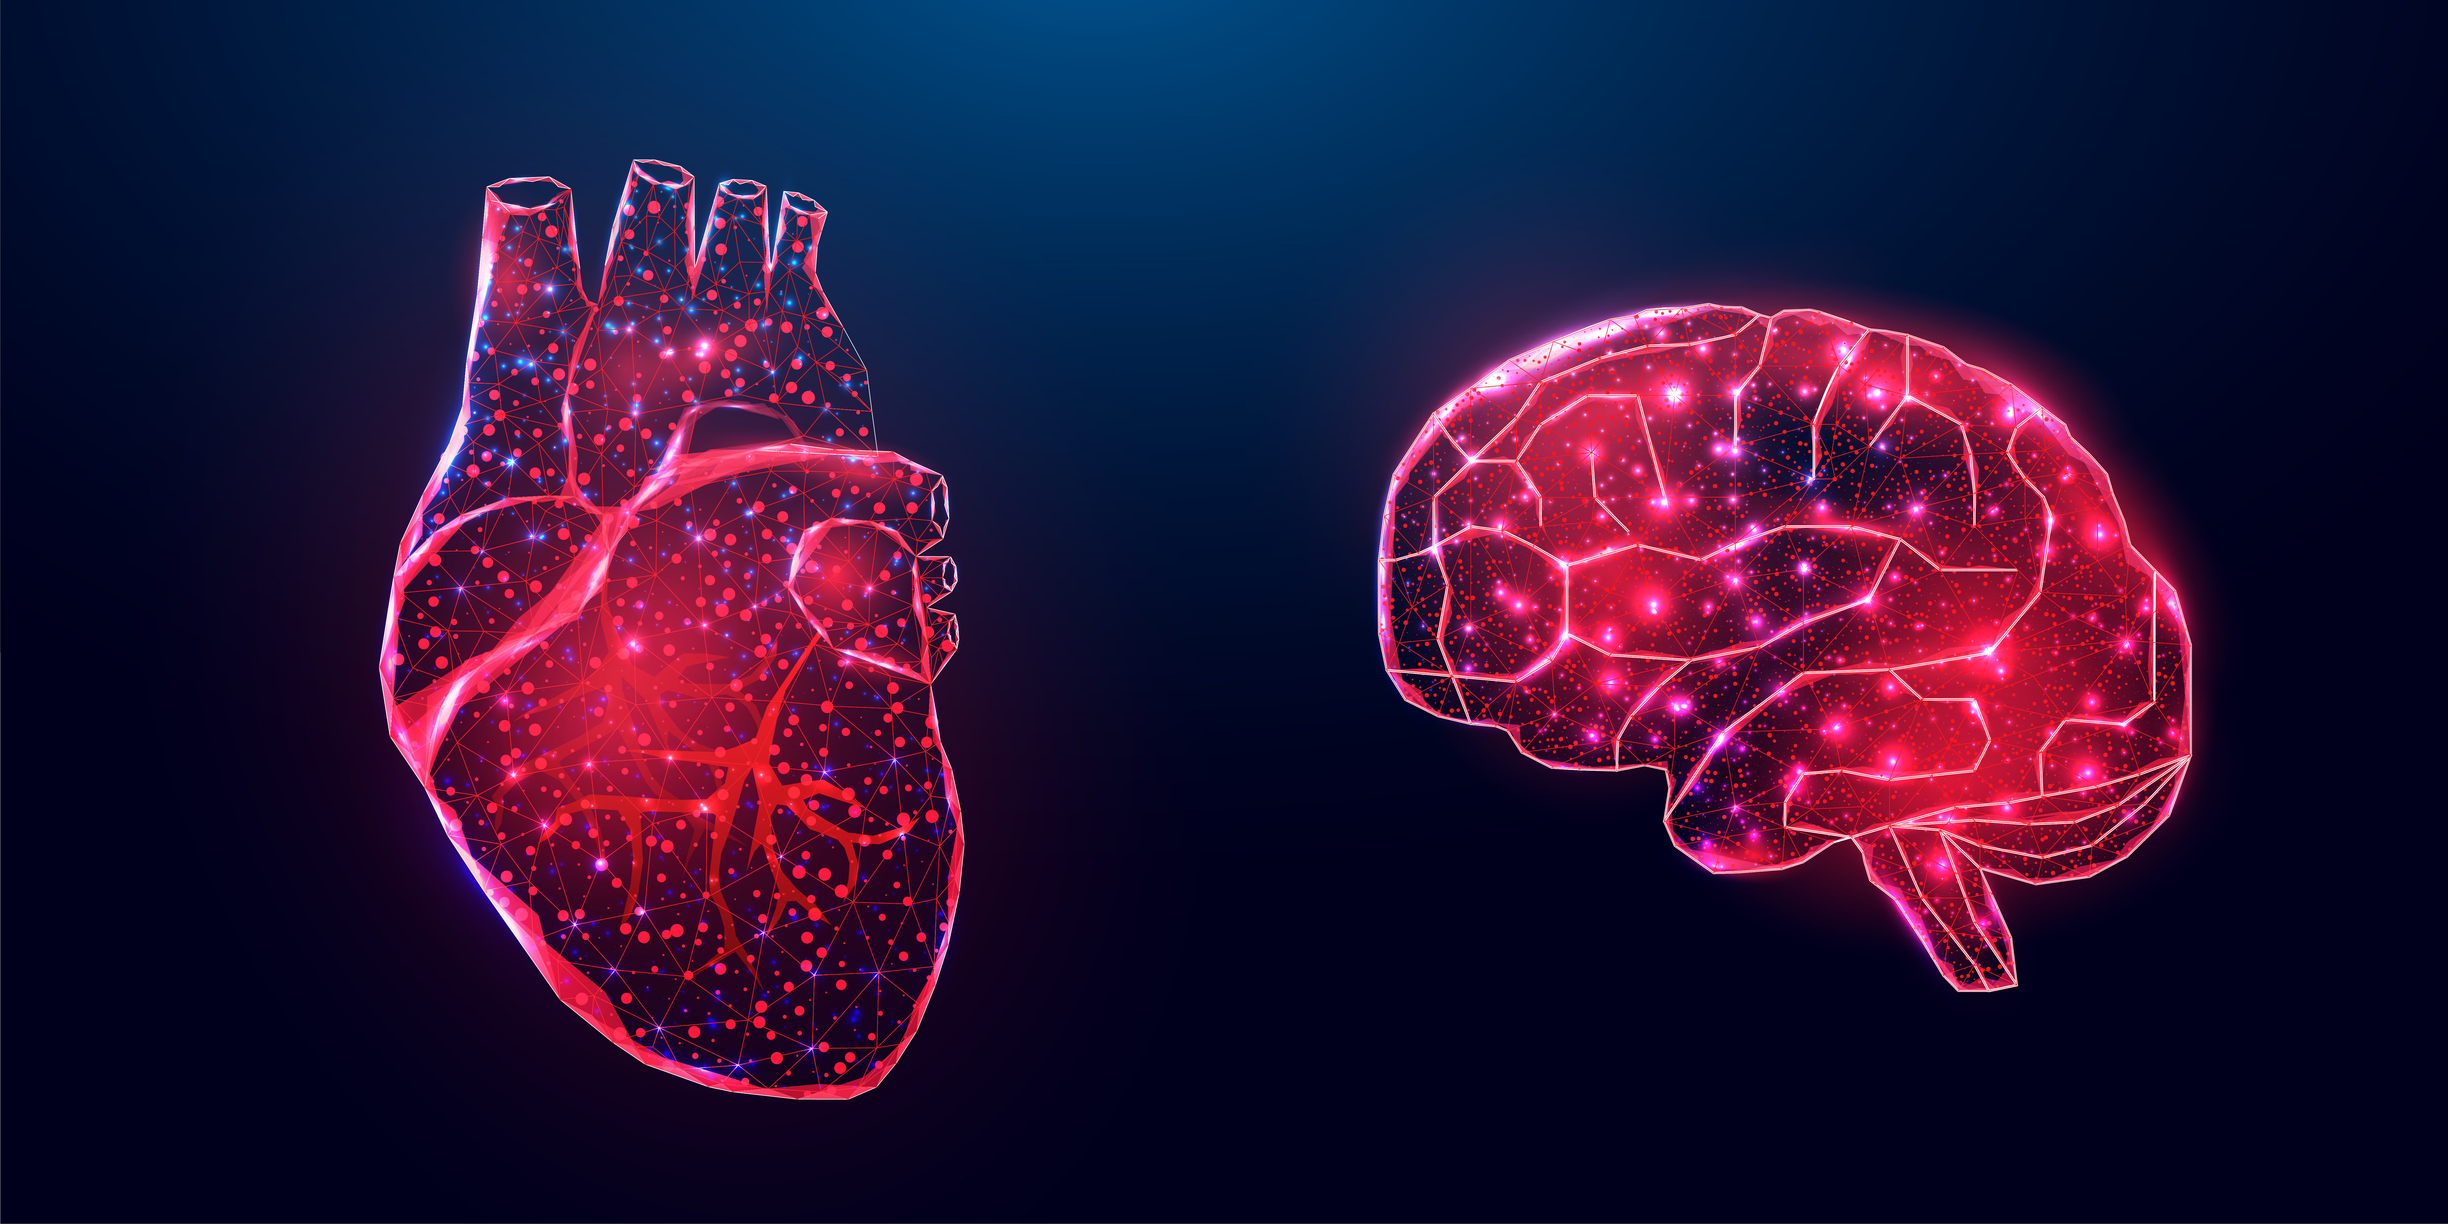 Don’t let heart problems prematurely age your brain